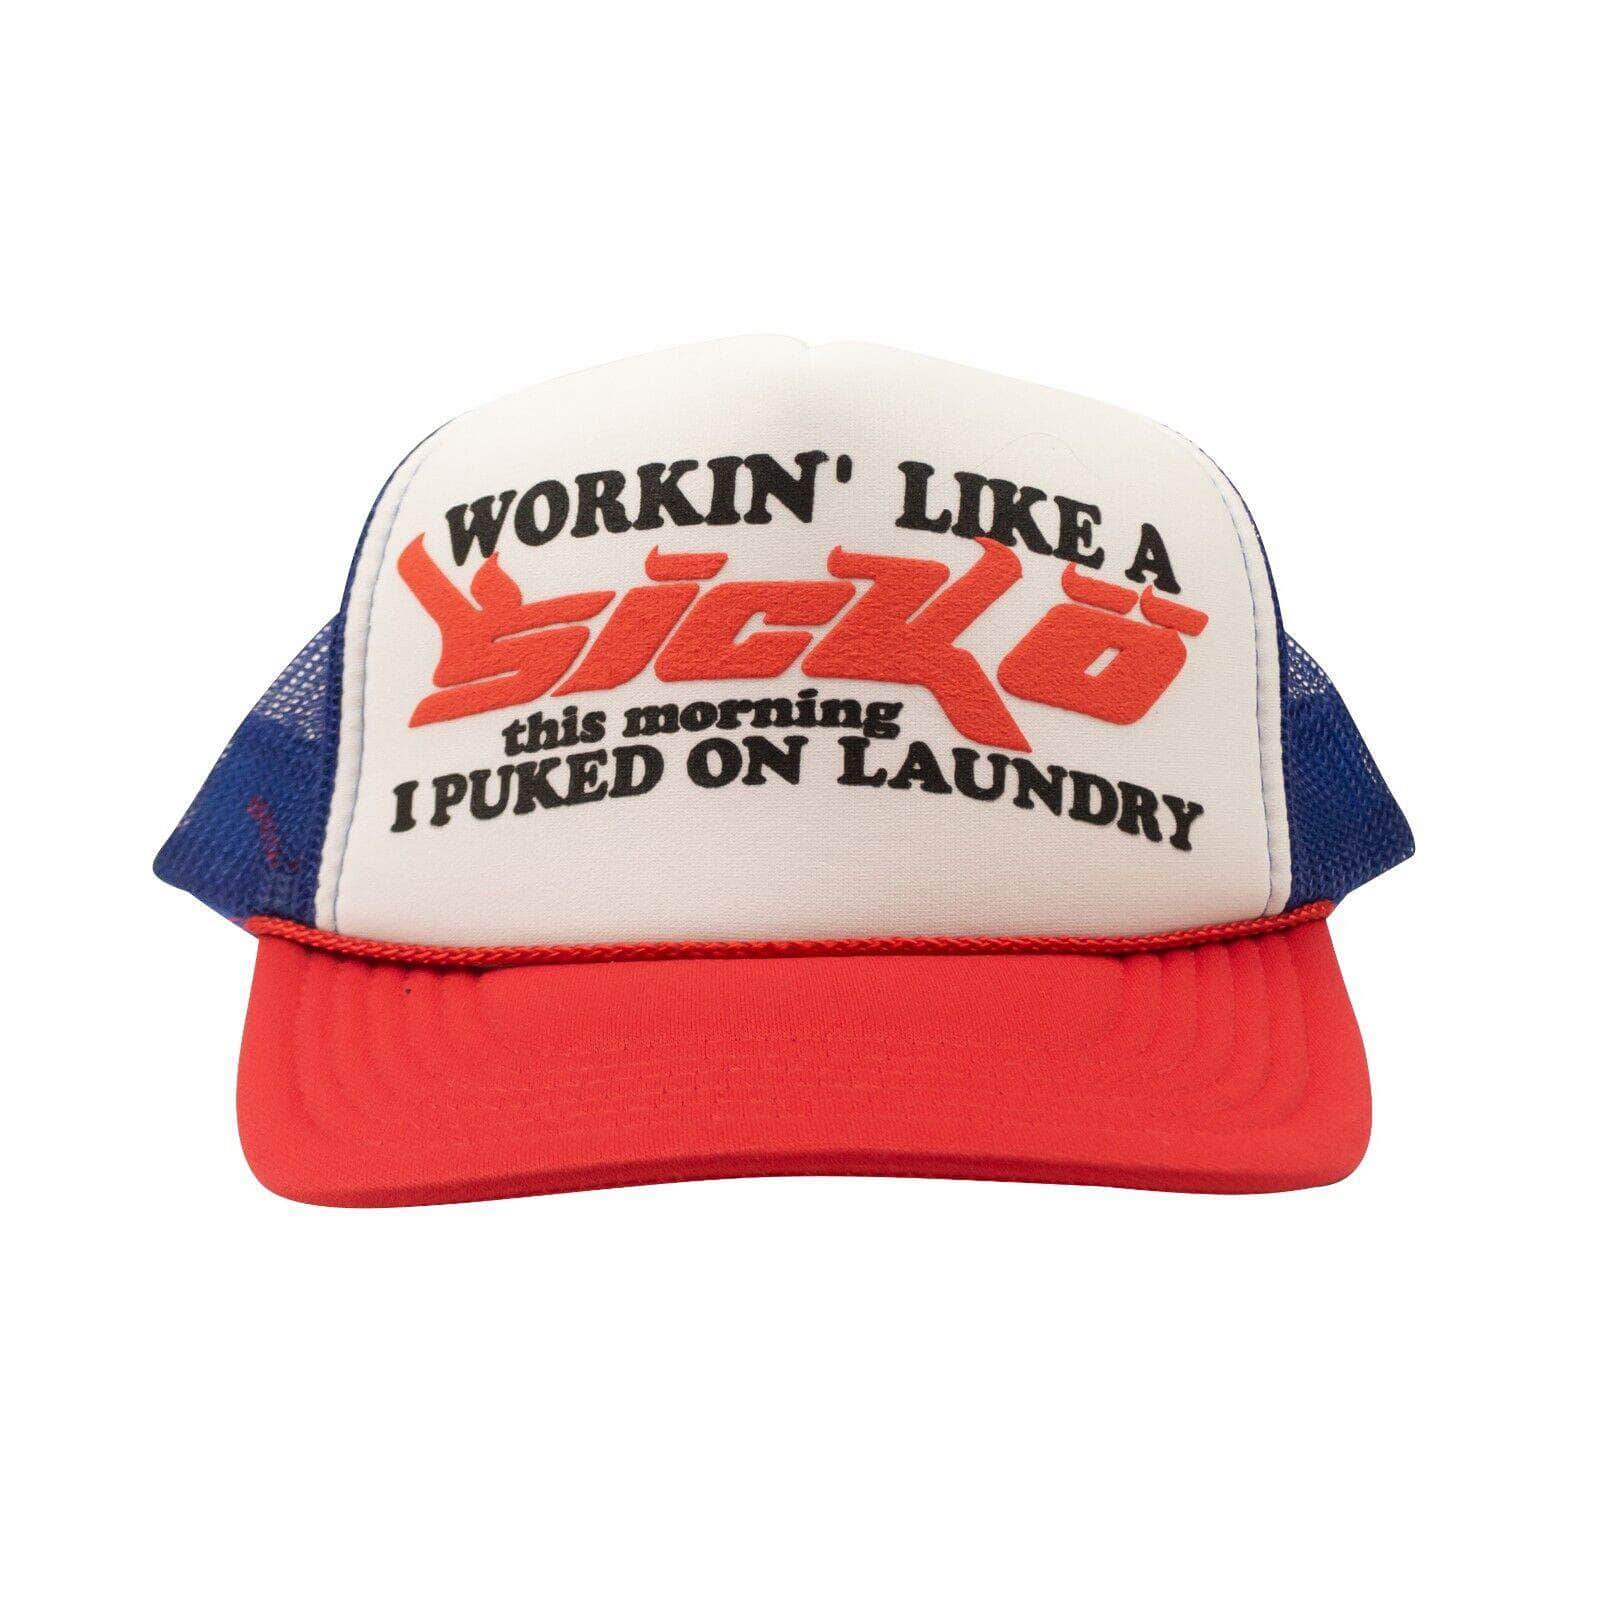 Sicko Laundry Trucker Hat Red/White/Blue